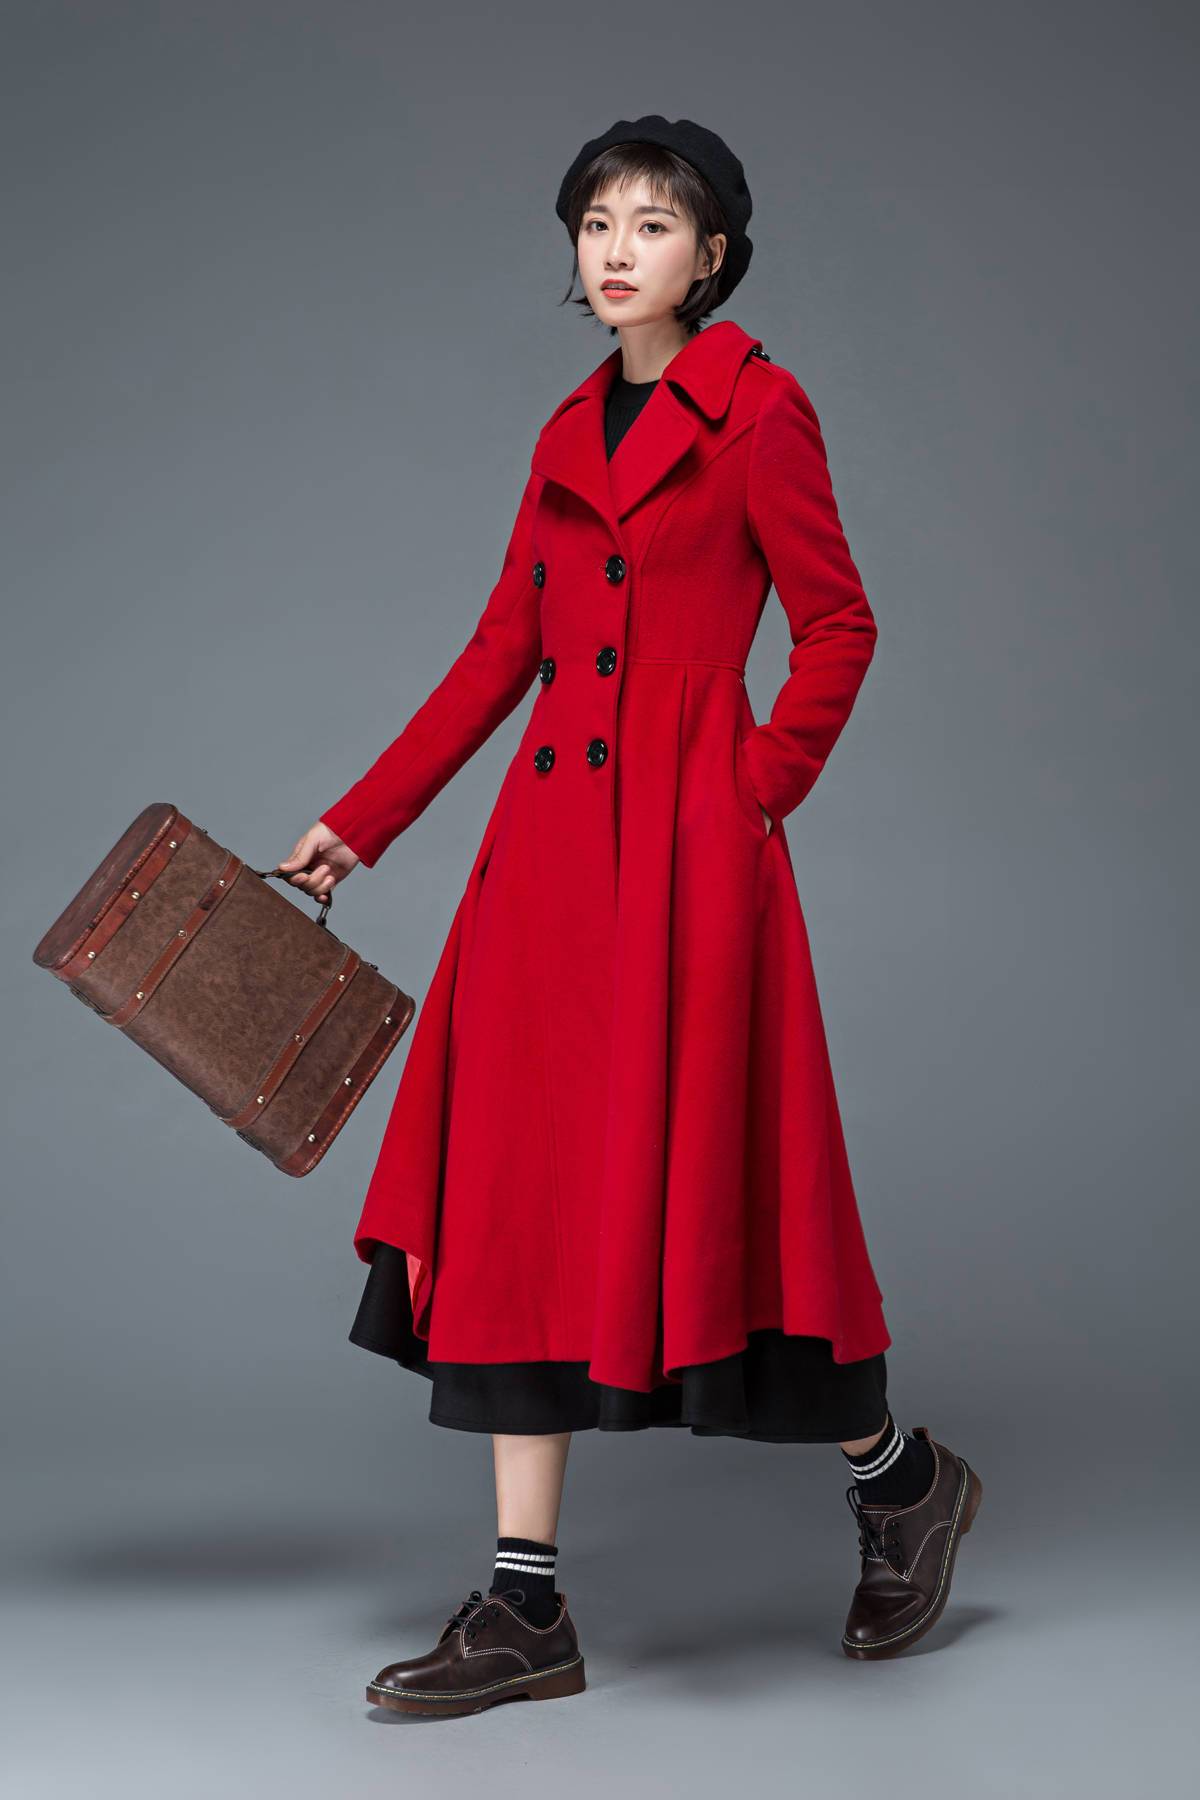 Warm Winter Coat, Wool Coat, Dress Coat, Woman Coat, Fit and Flare